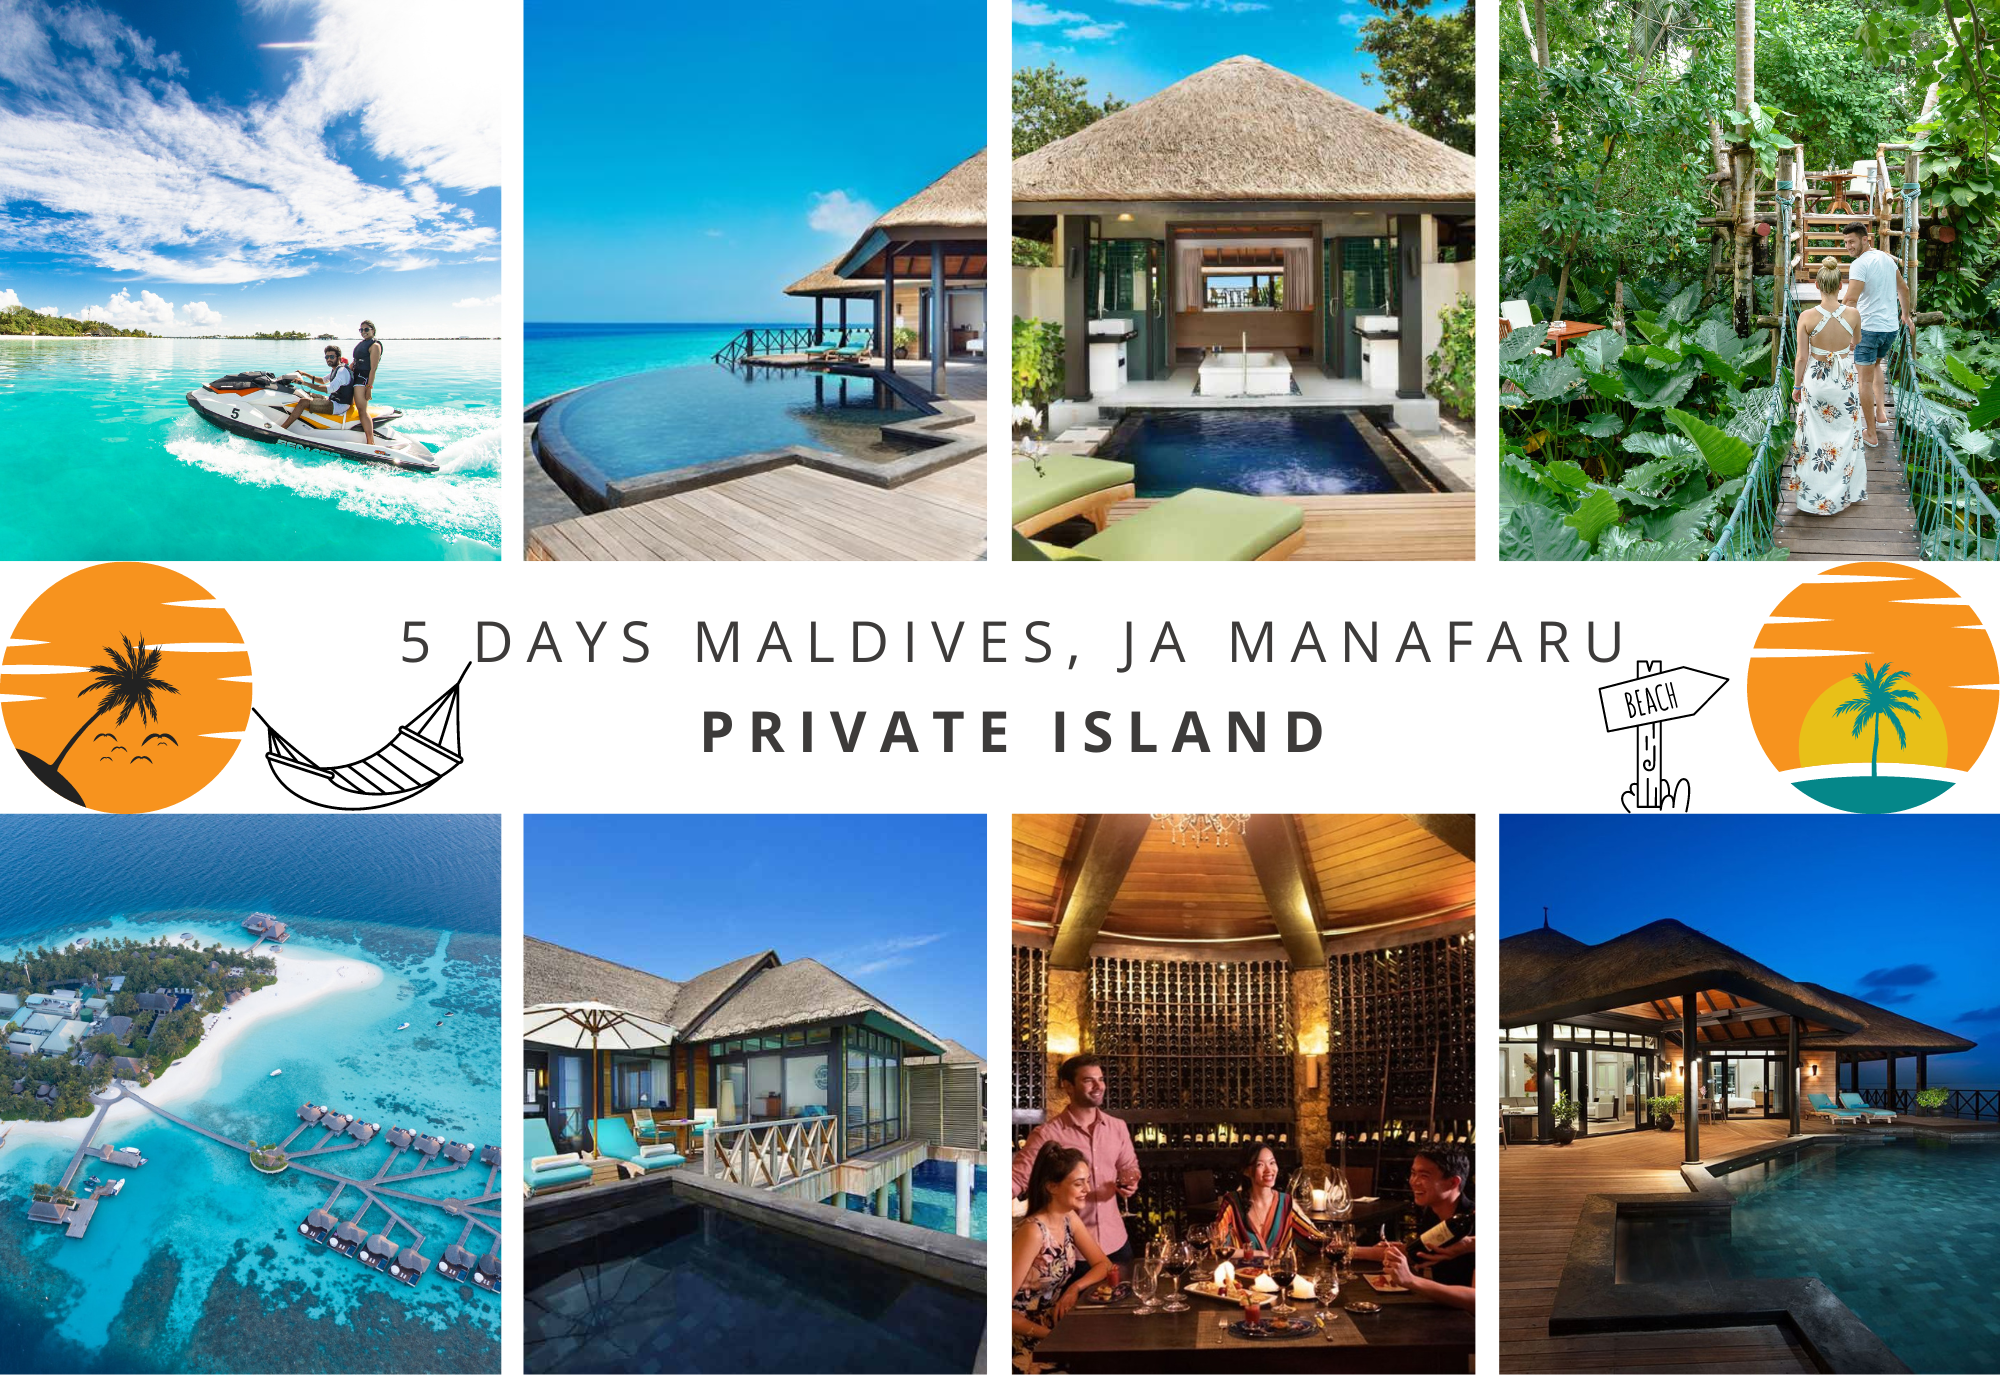 5 Days Maldives, JA Manafaru Private Island